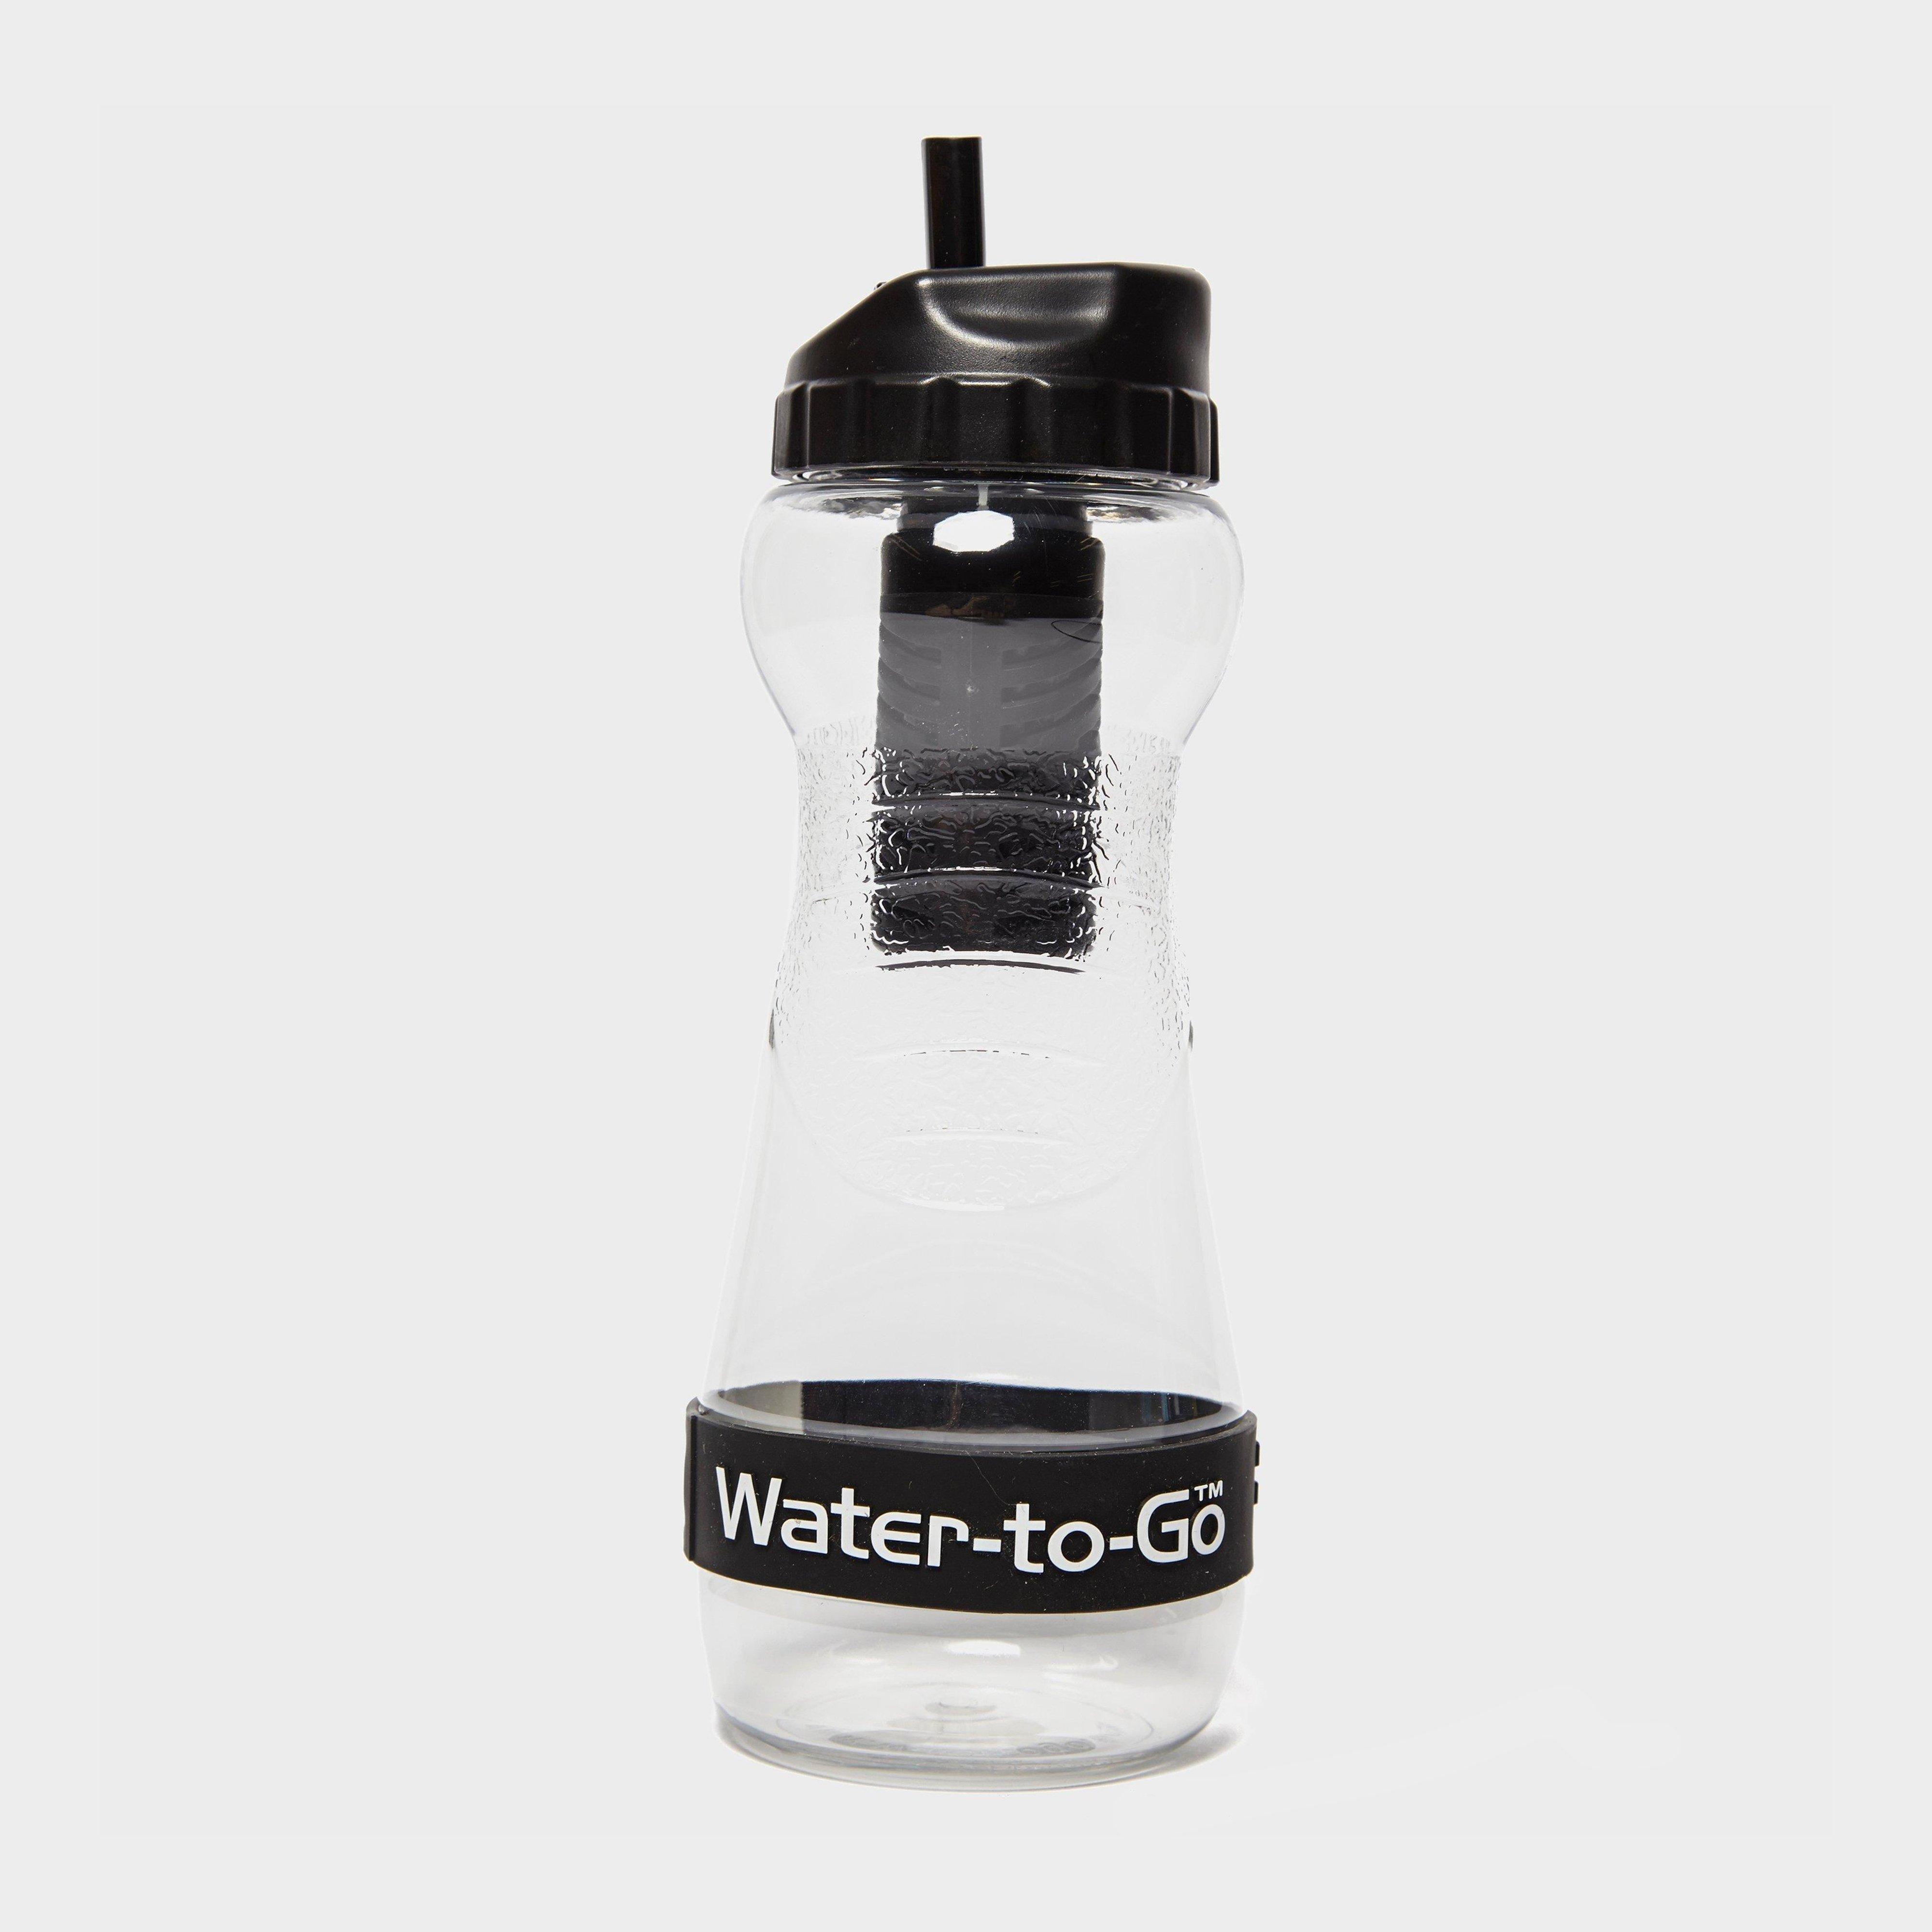 Water-to-go Filtered Water Bottle 500ml - Black/blk  Black/blk